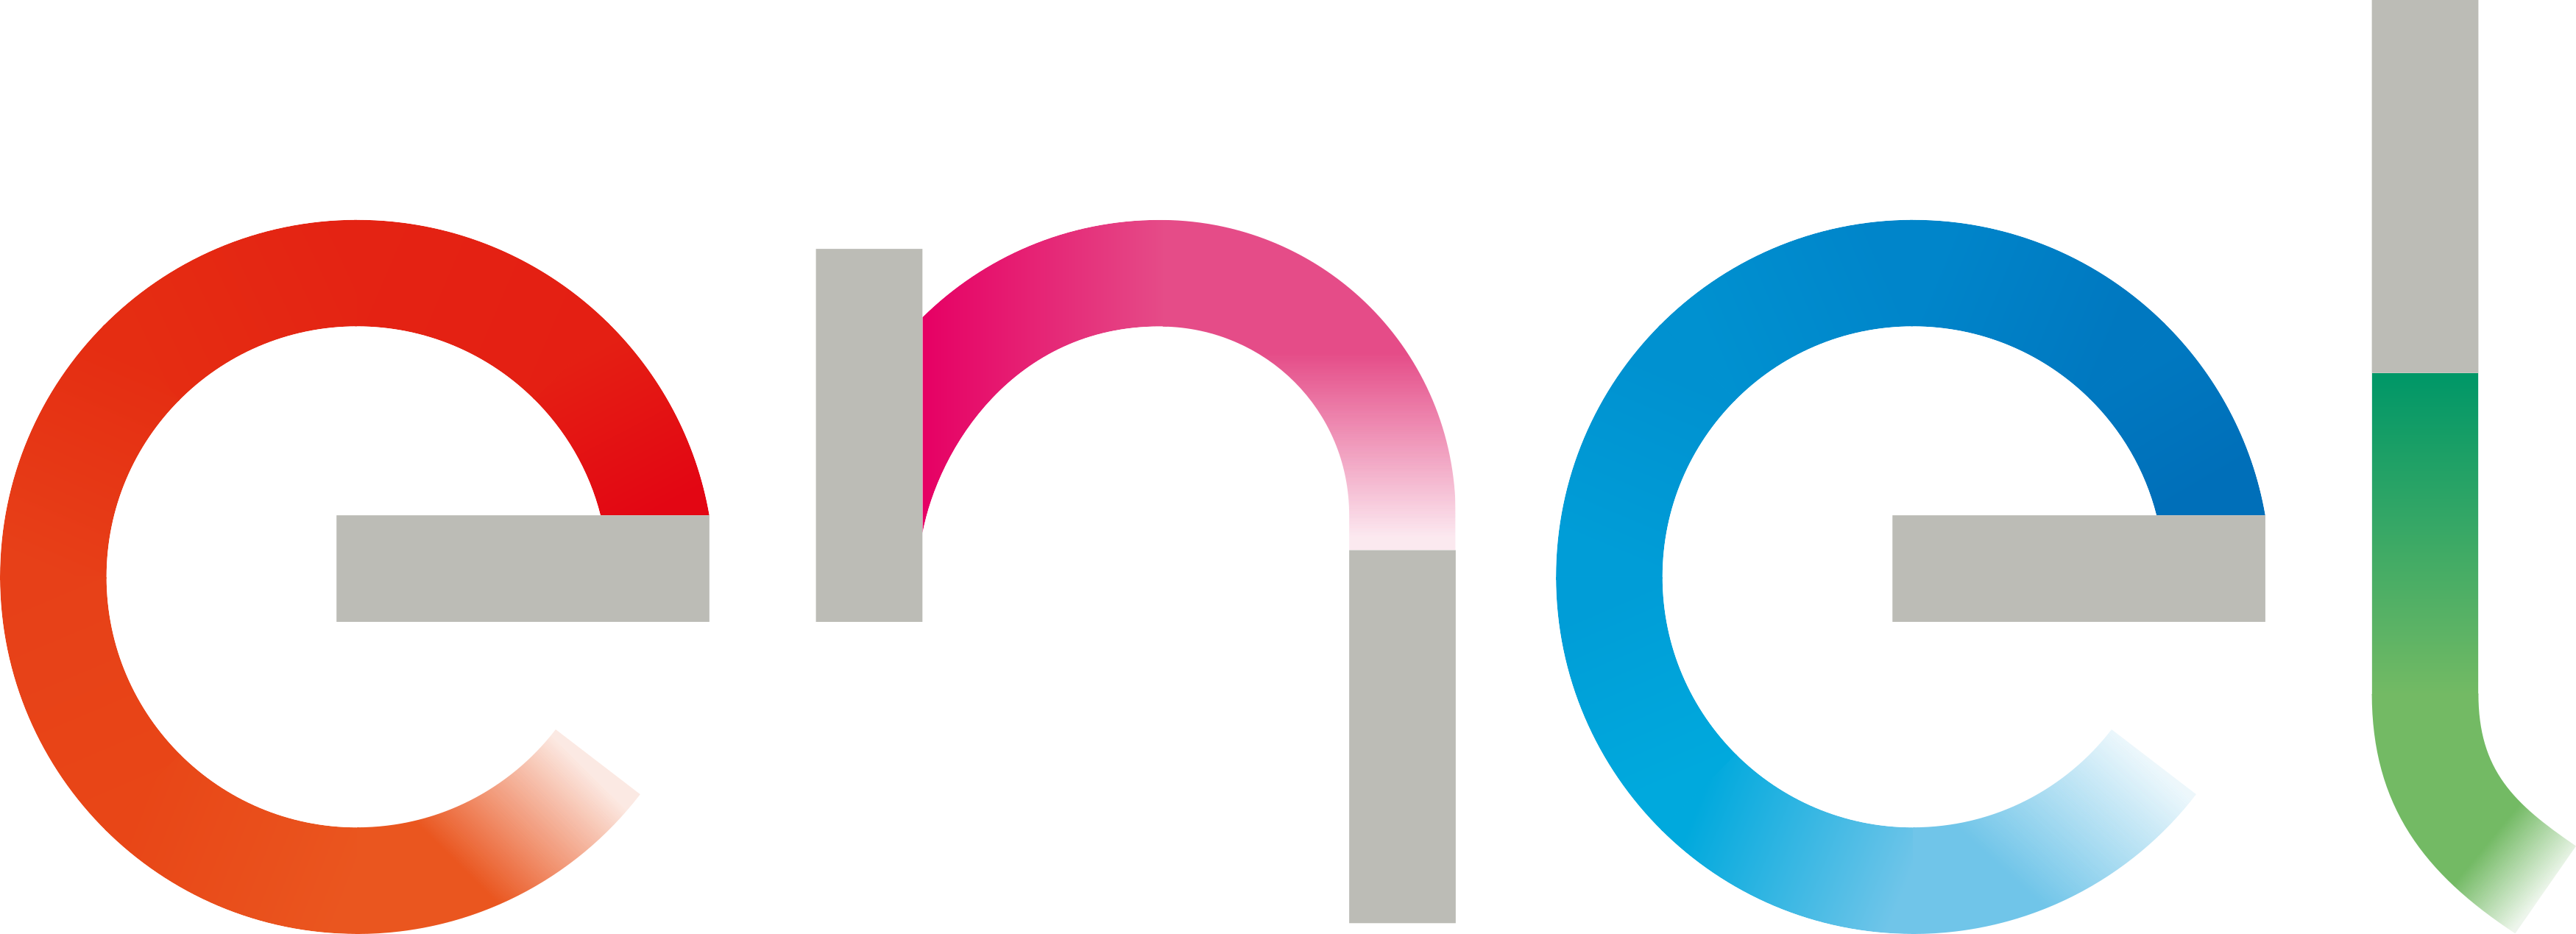 Enel Logo.